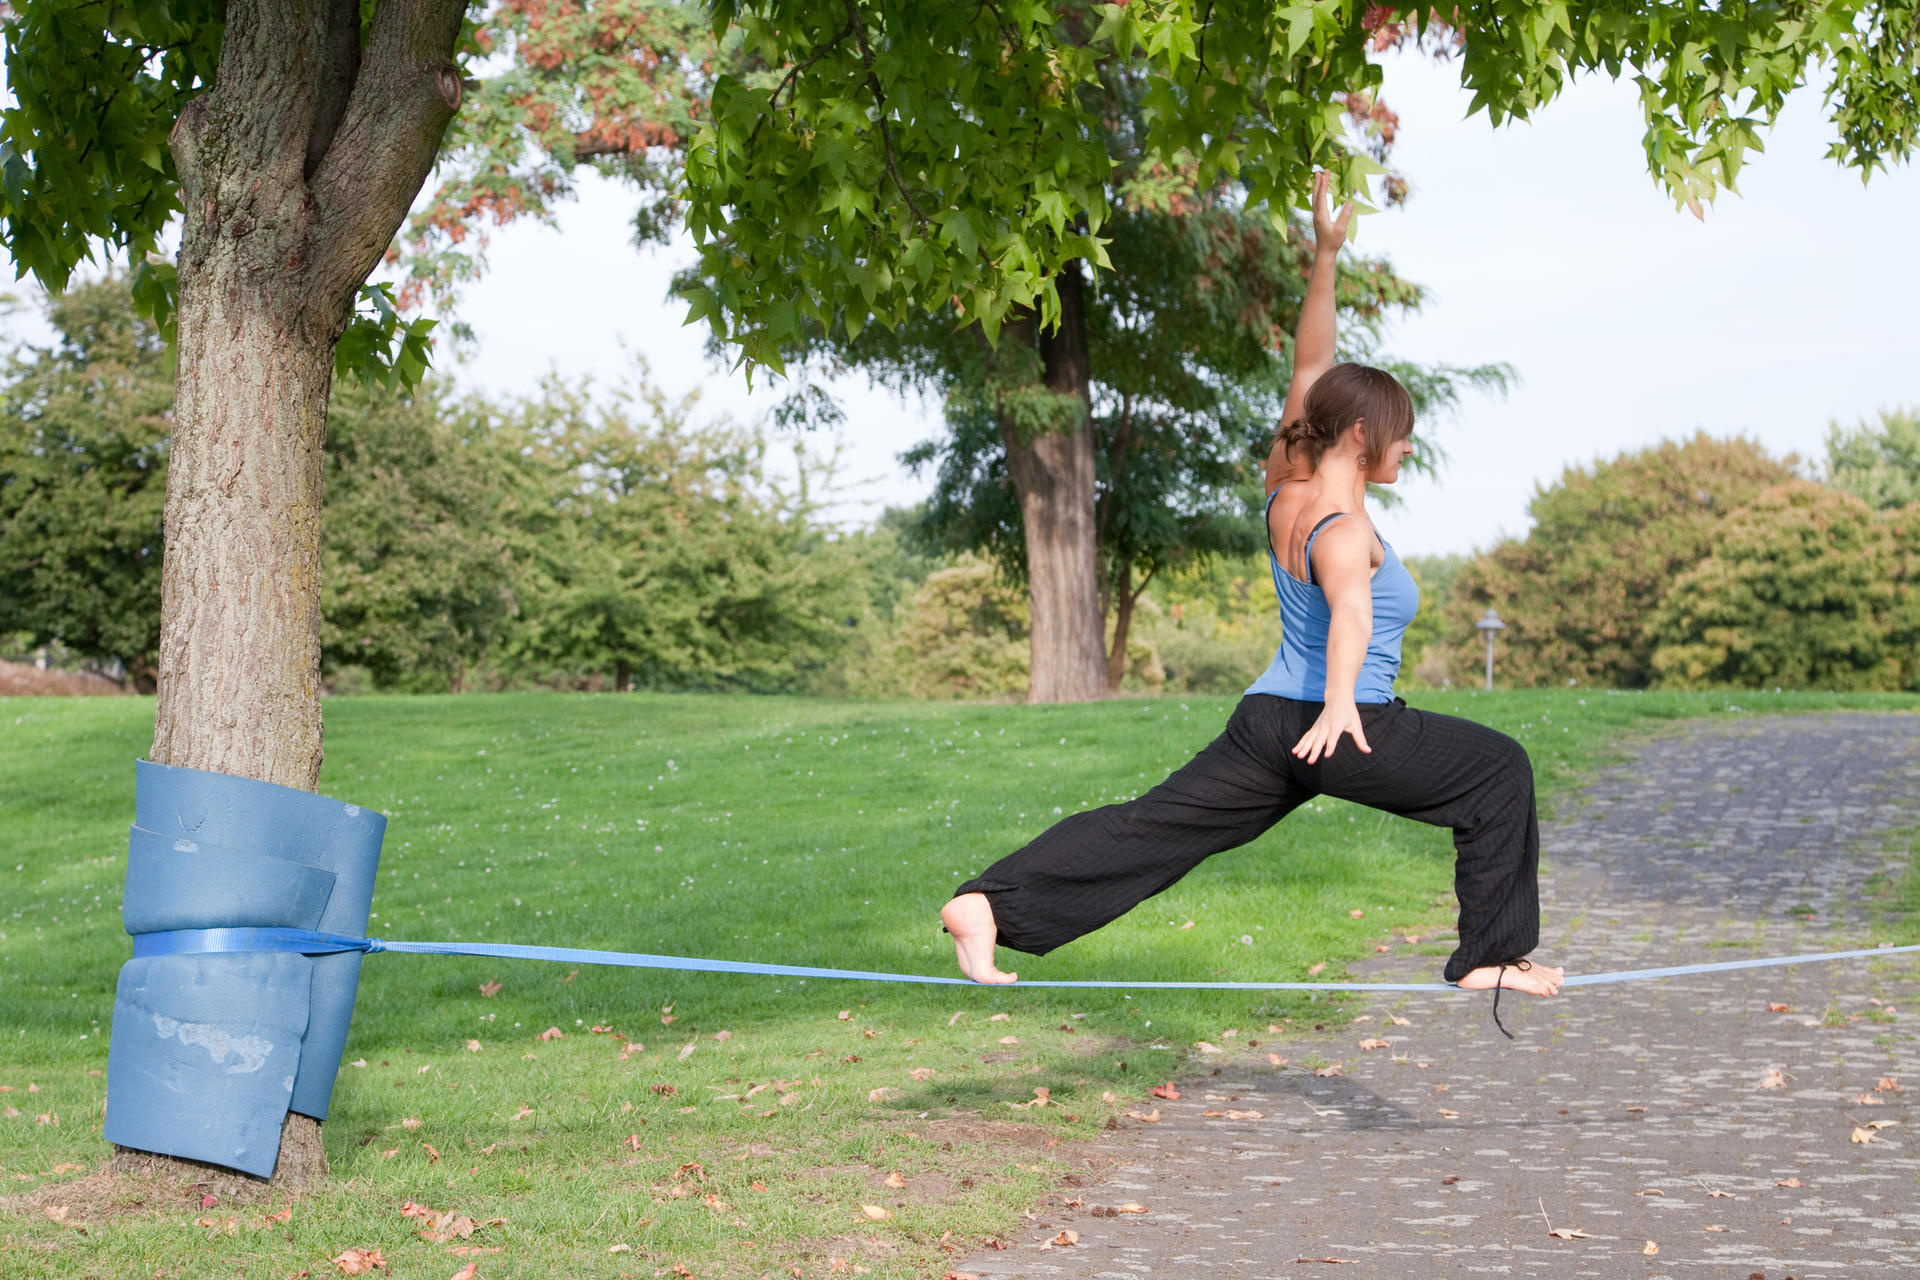 Slacklining: Slackline yoga in the park, Standing postures, Outdoor balance practice. 1920x1280 HD Background.